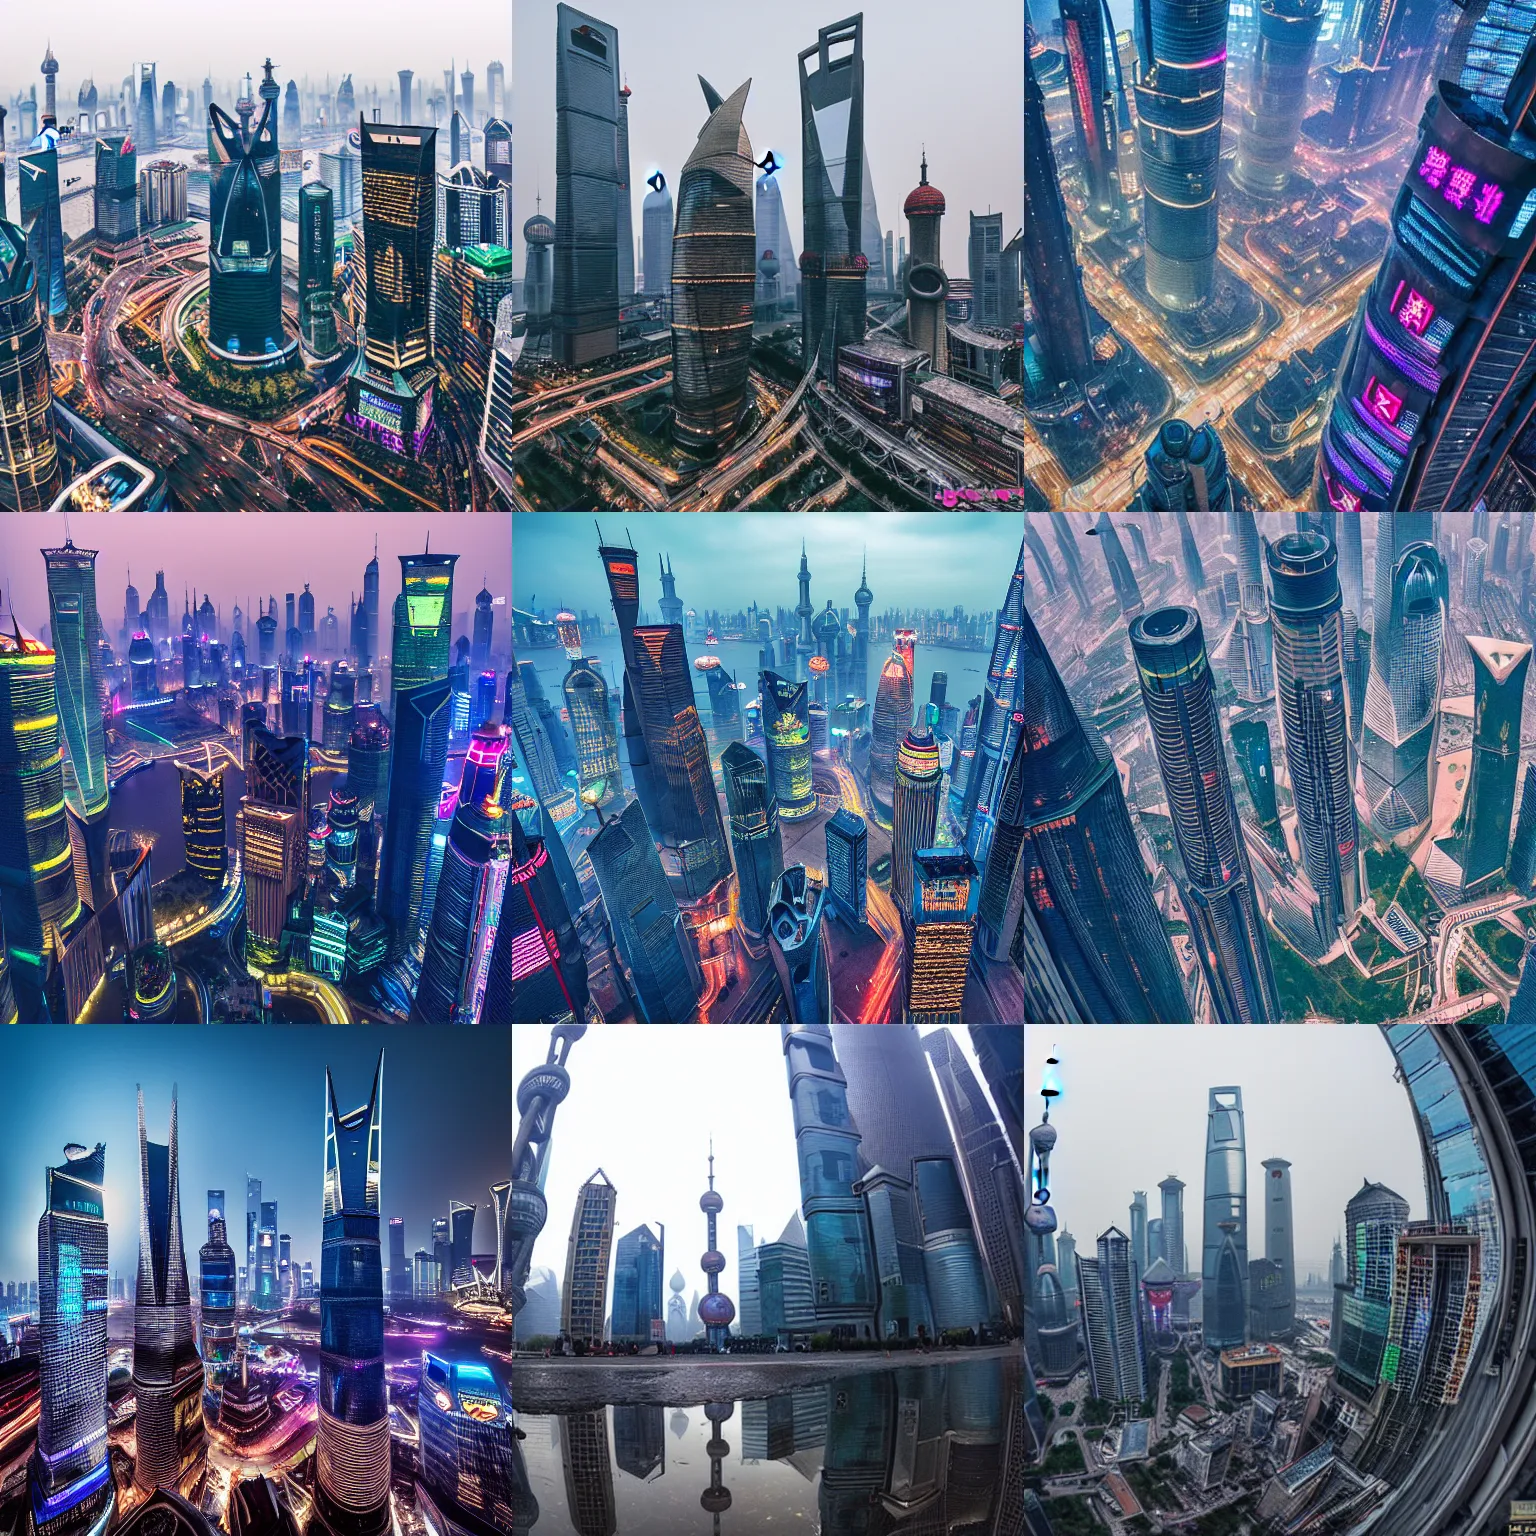 Prompt: shanghai city, cyberpunk, wide angle lens